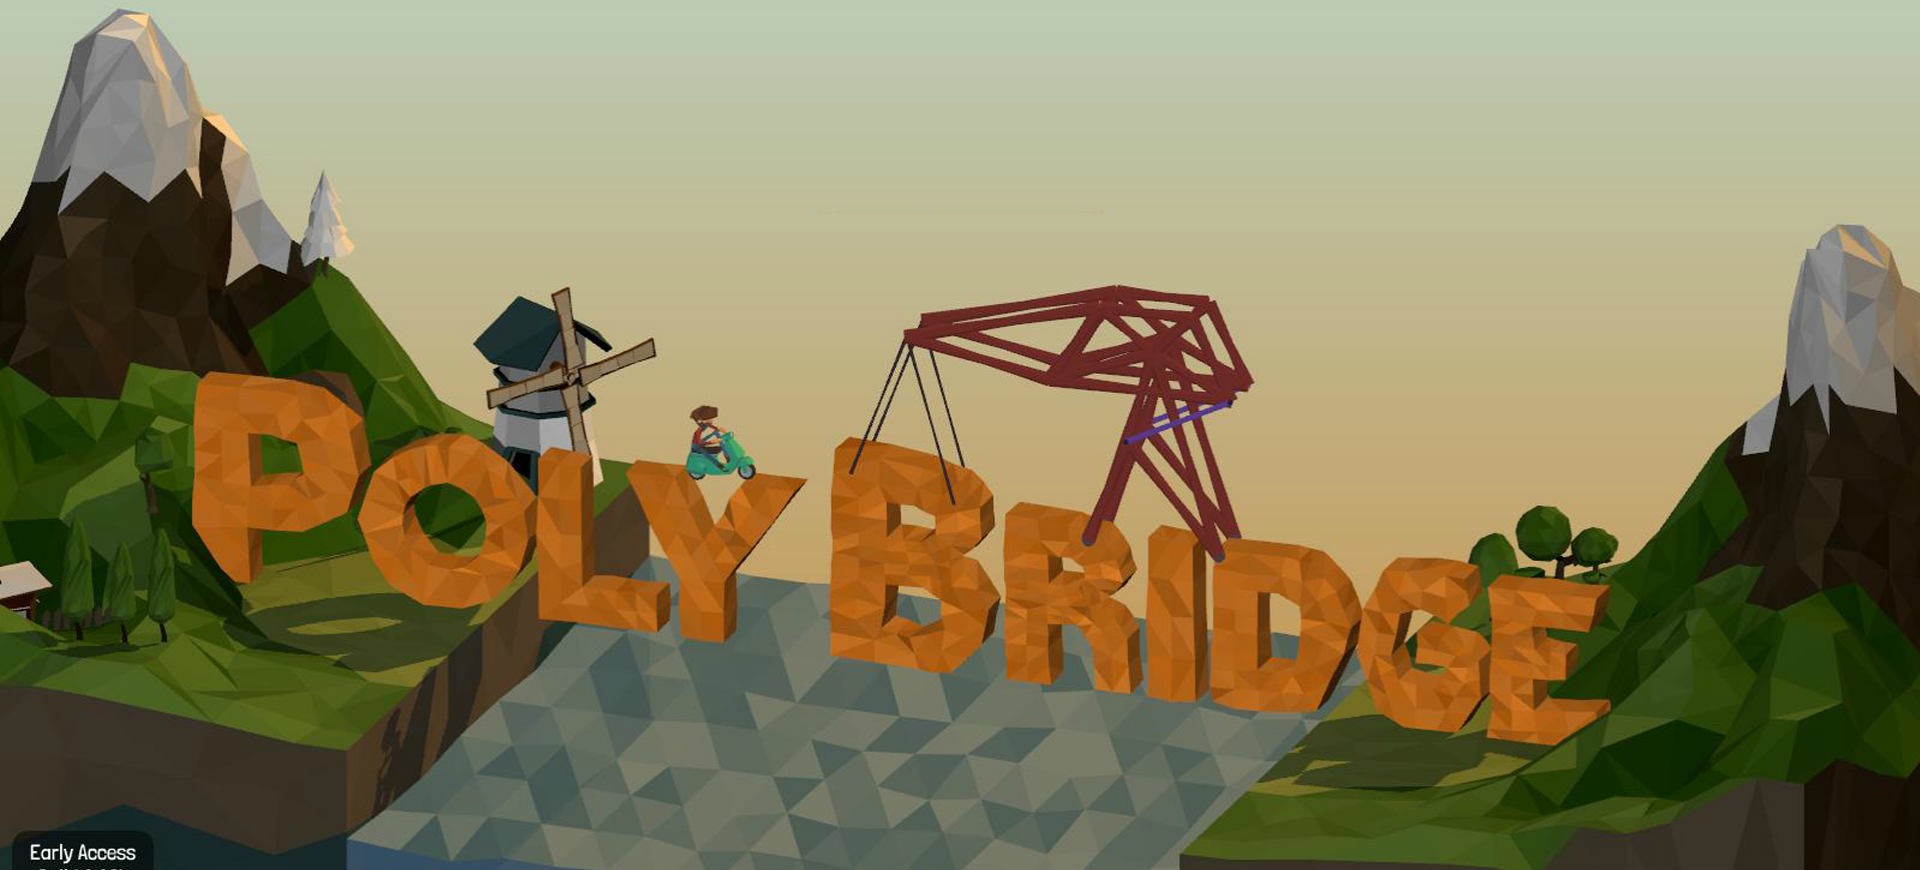 Poly Bridge – Kết nối mọi bến bờ